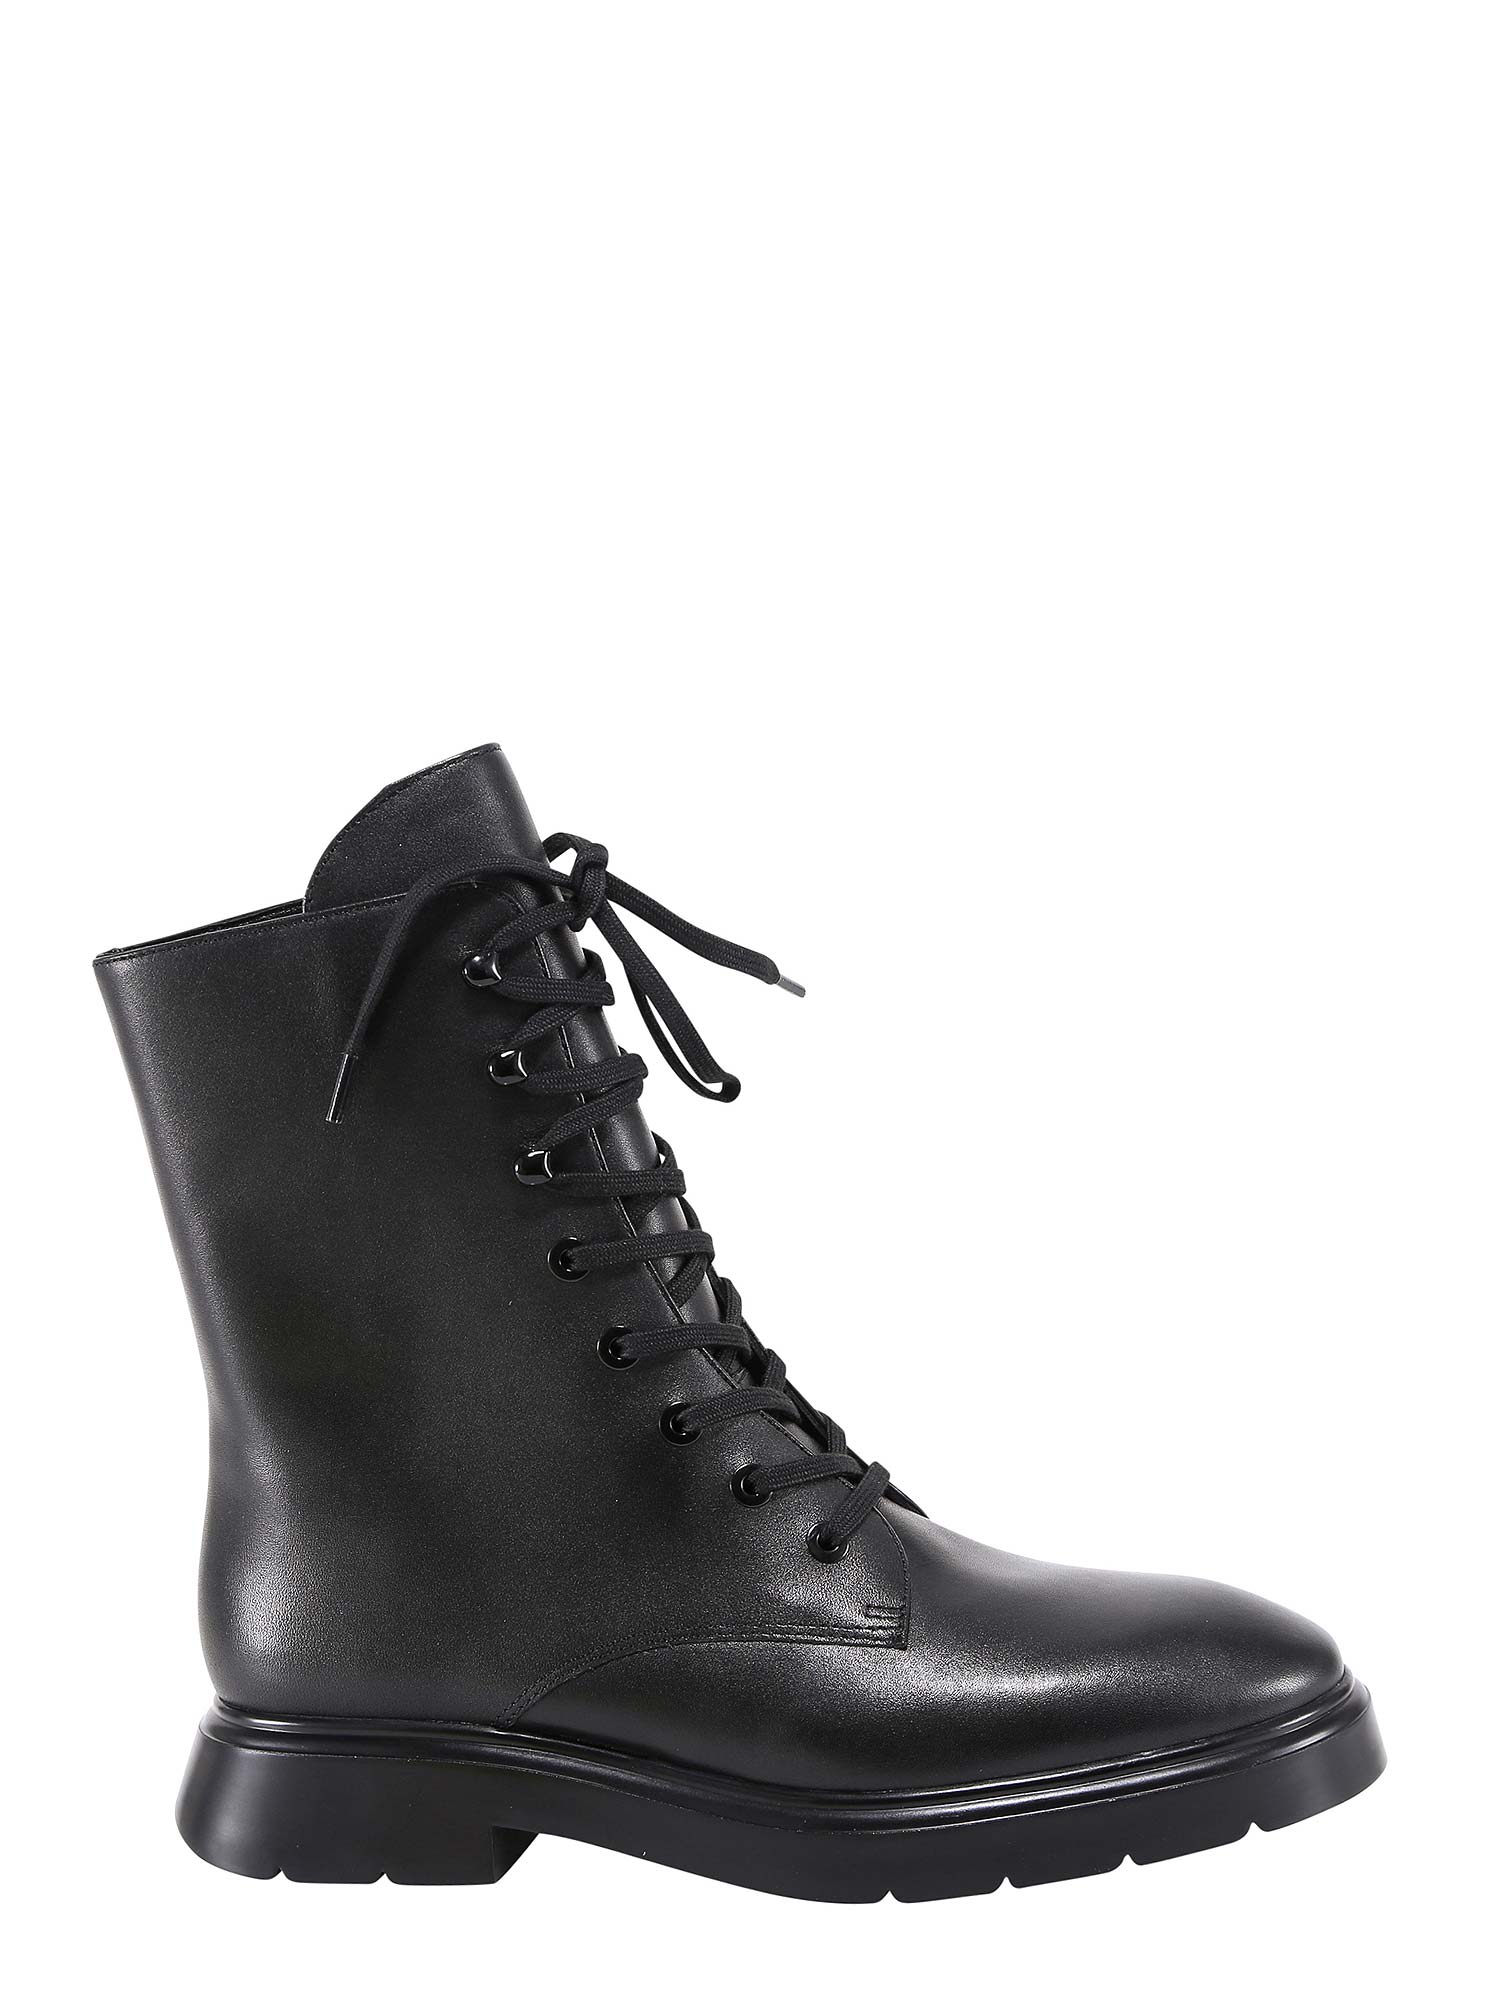 Buy Stuart Weitzman Ankle Boots online, shop Stuart Weitzman shoes with free shipping